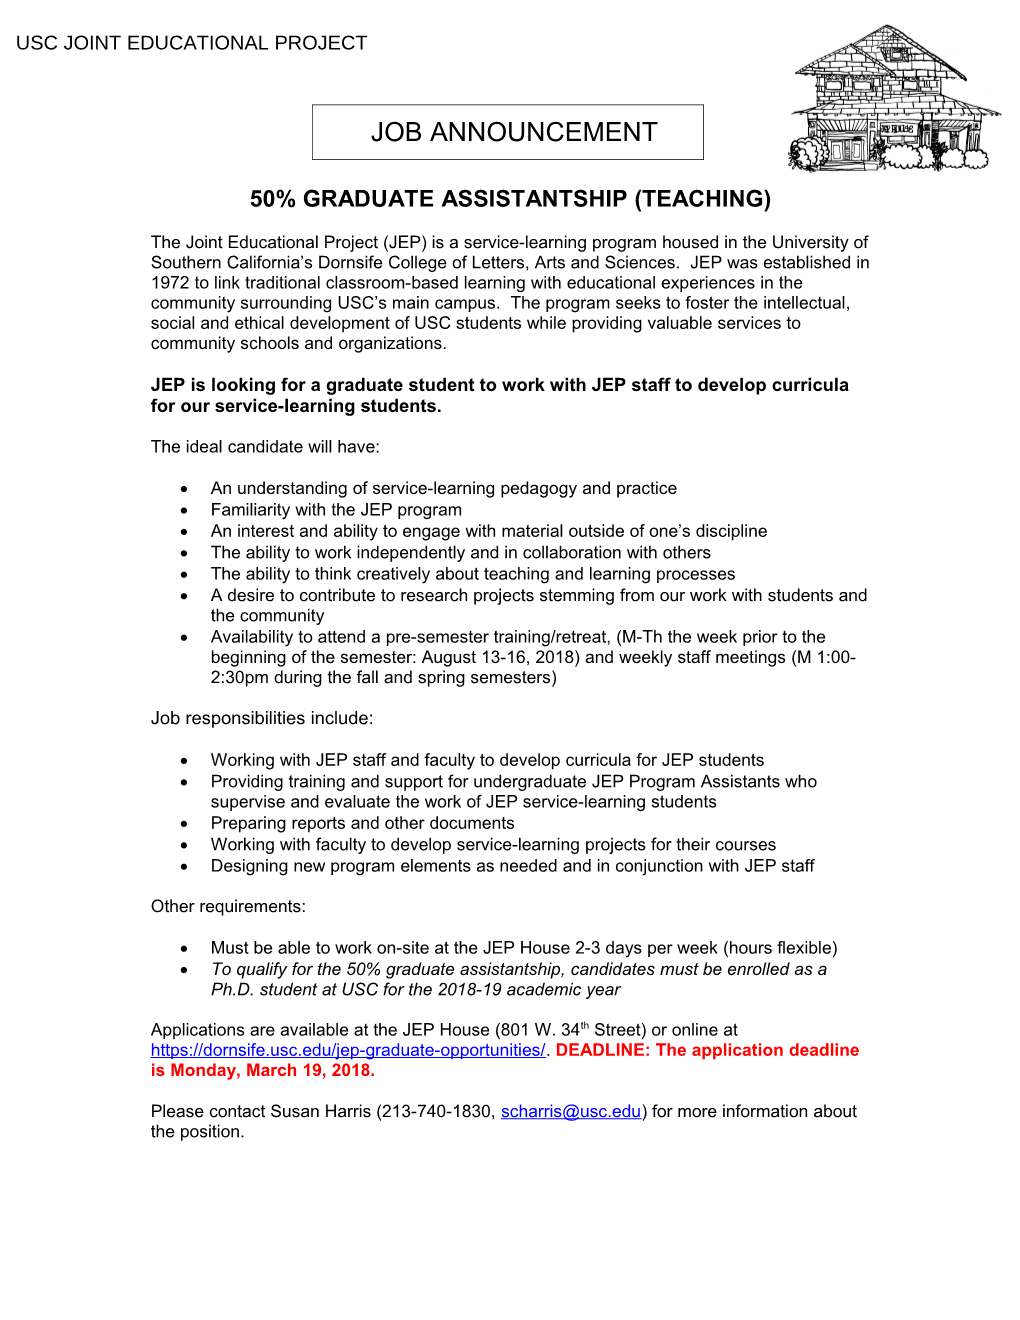 50% Graduate Assistantship (Teaching)